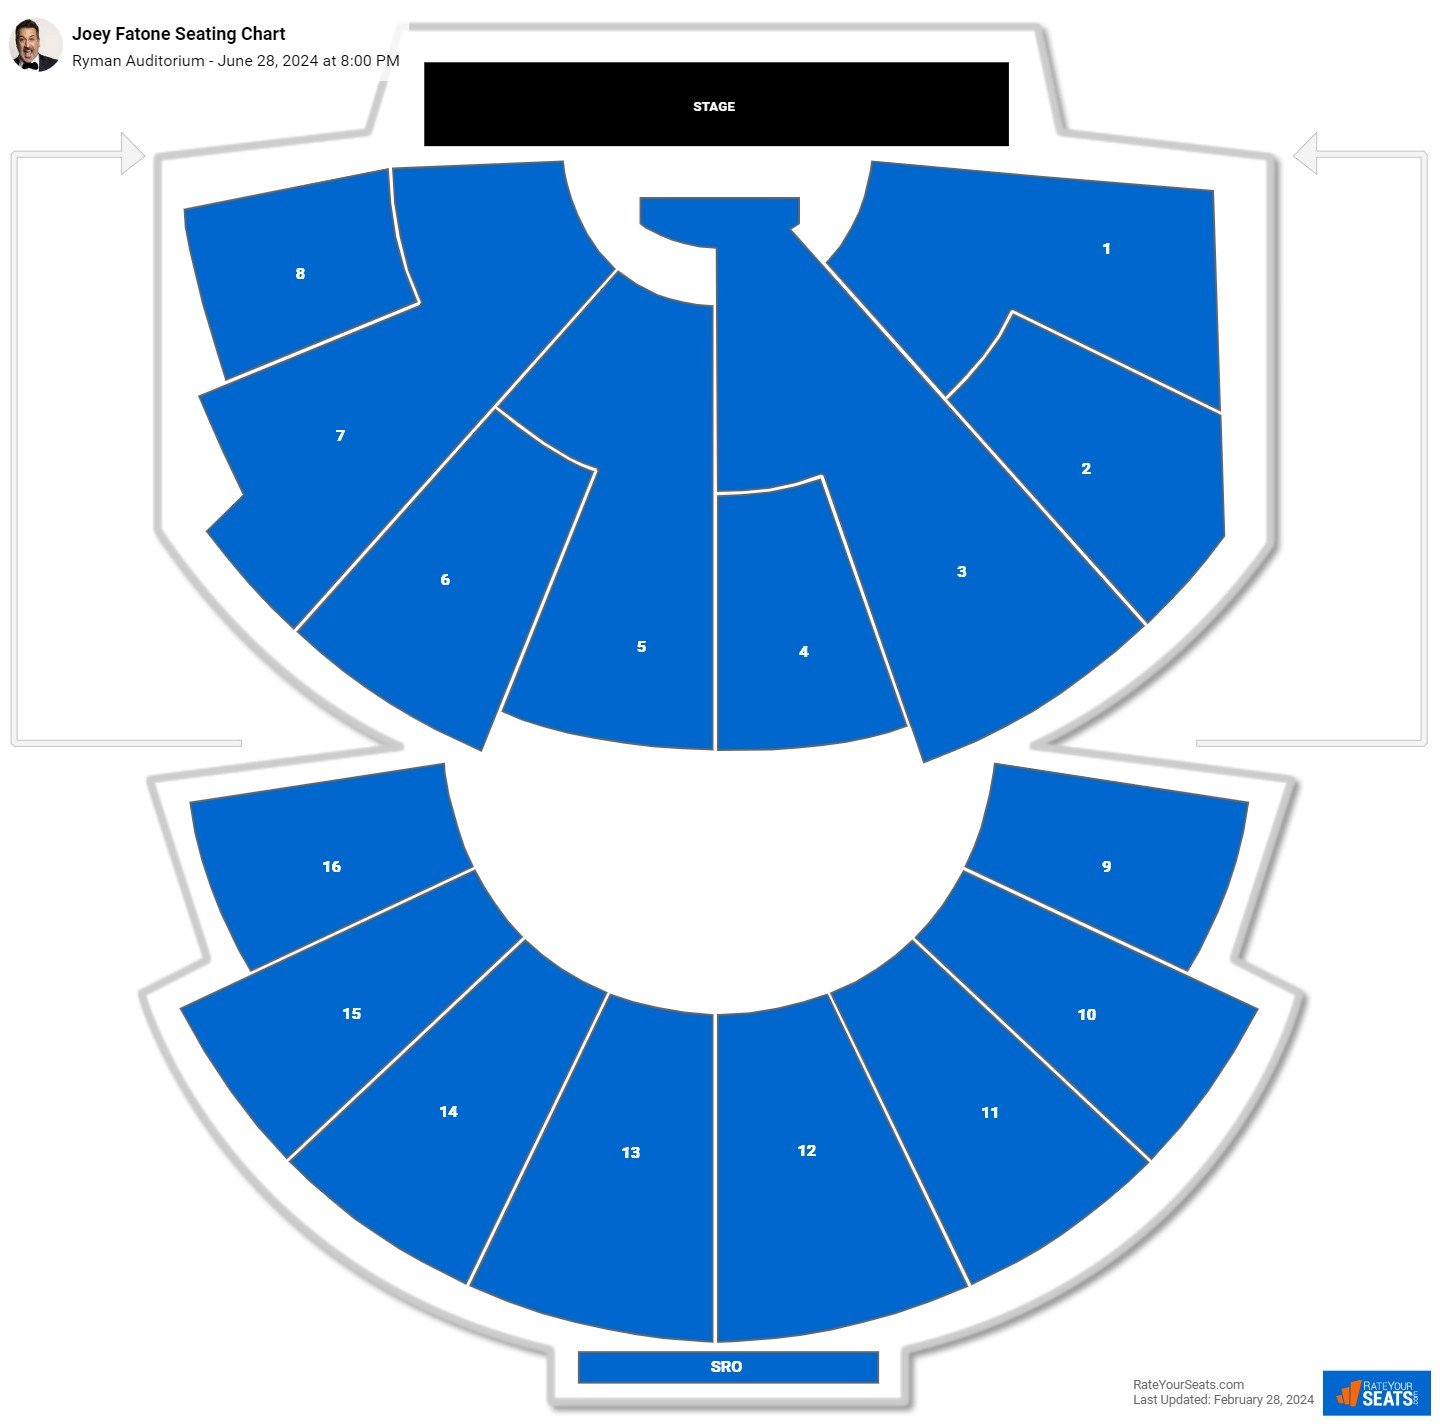 Joey Fatone seating chart Ryman Auditorium